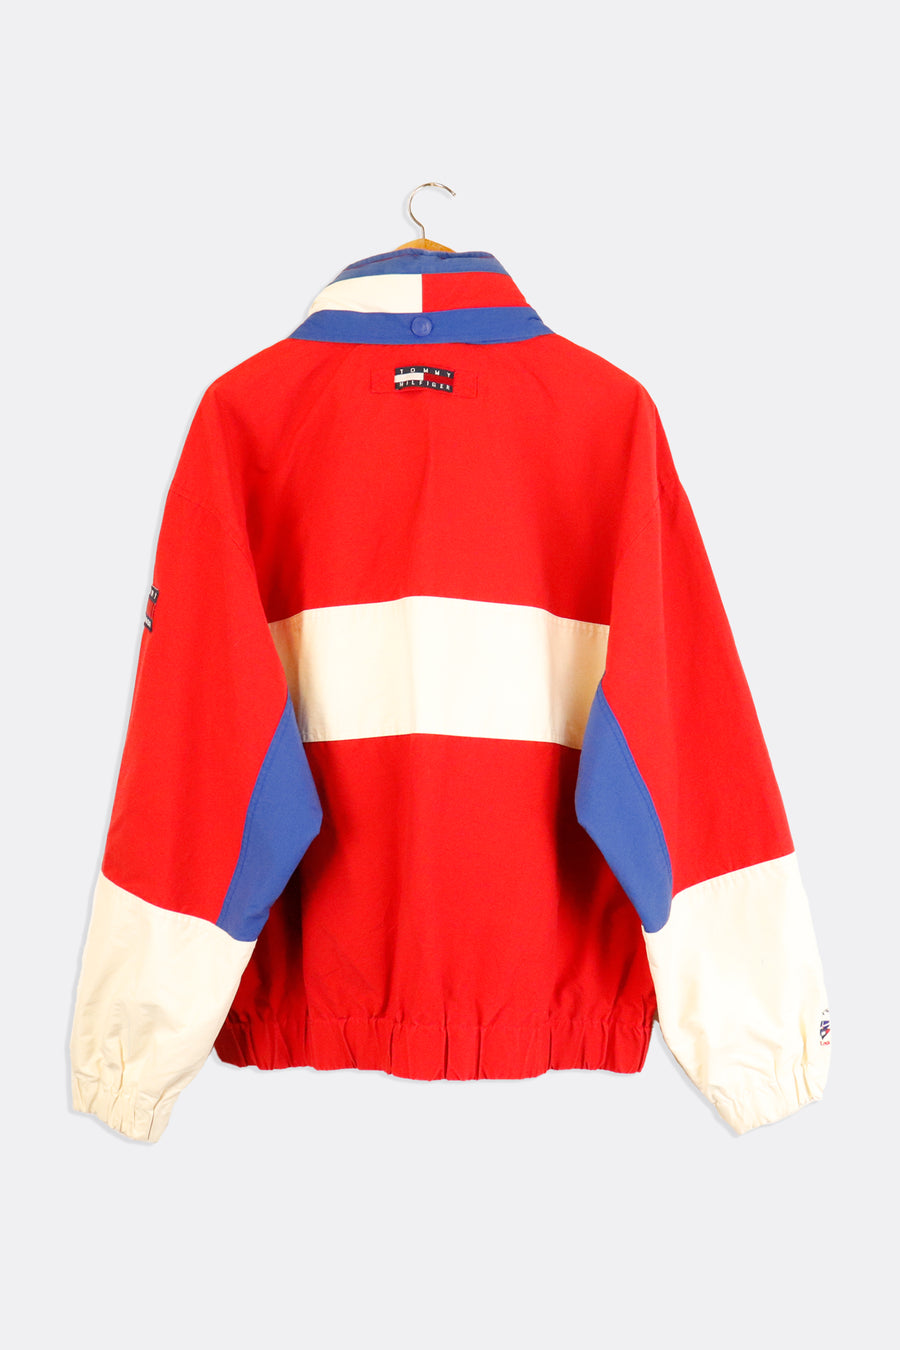 Vintage Tommy Hilfiger Full Zip Color Block Rain Jacket Outerwear Sz XL